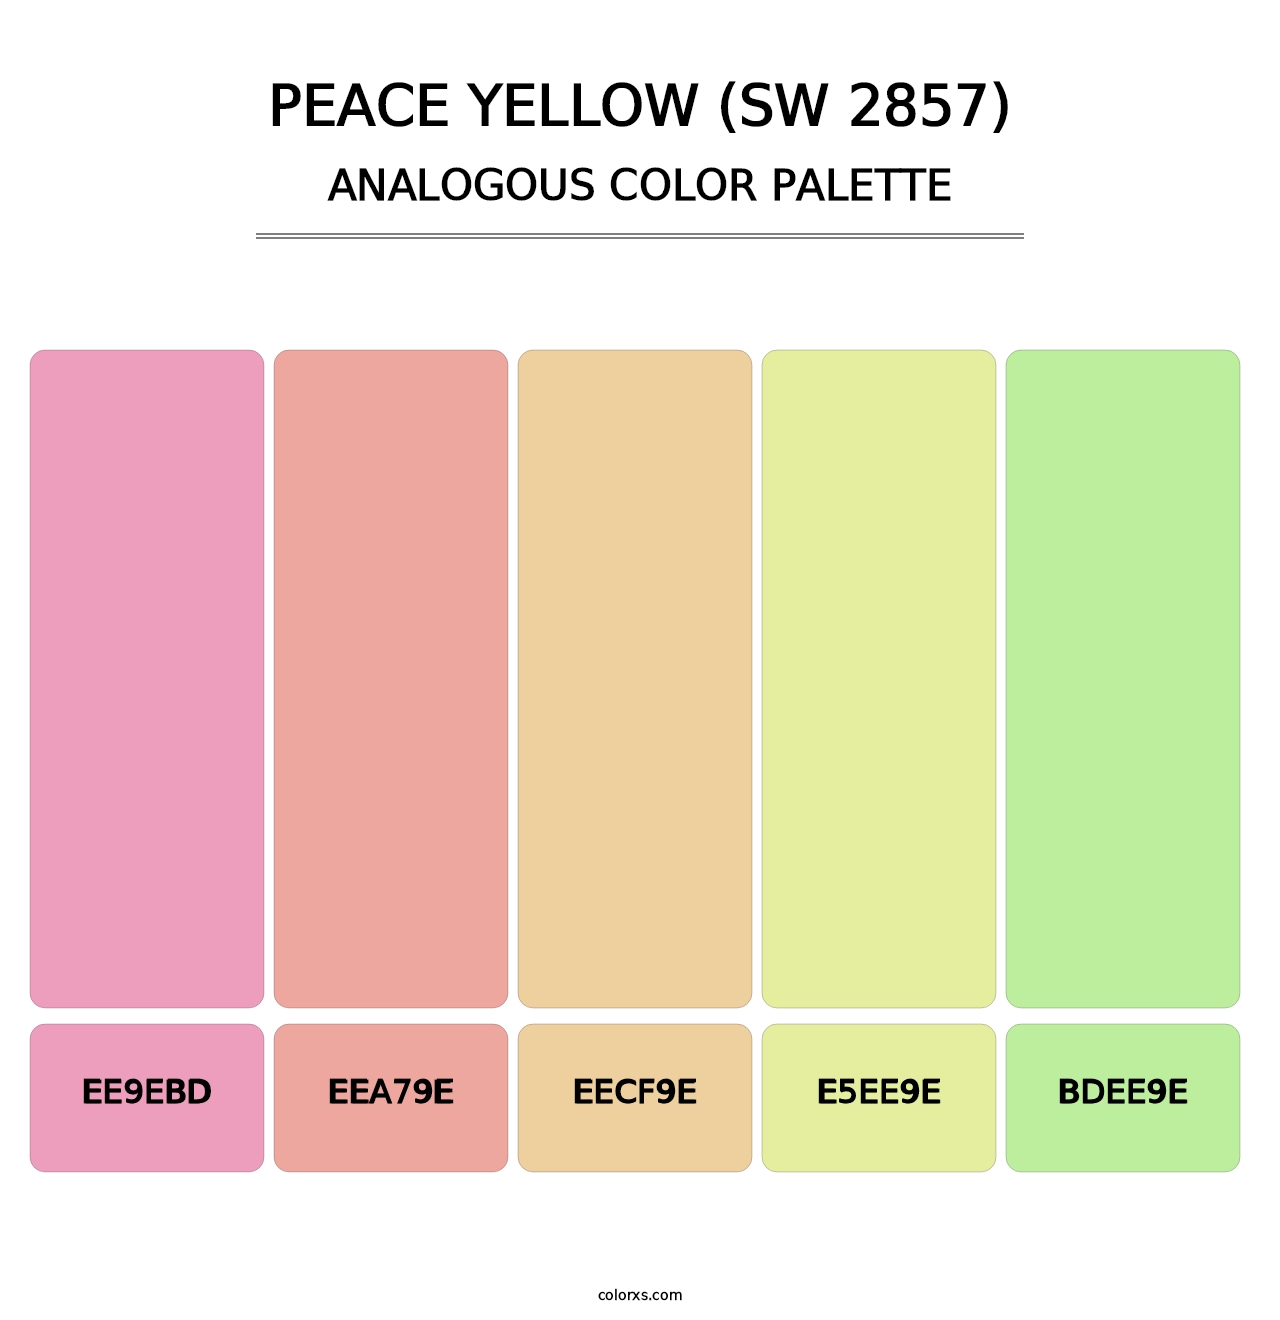 Peace Yellow (SW 2857) - Analogous Color Palette